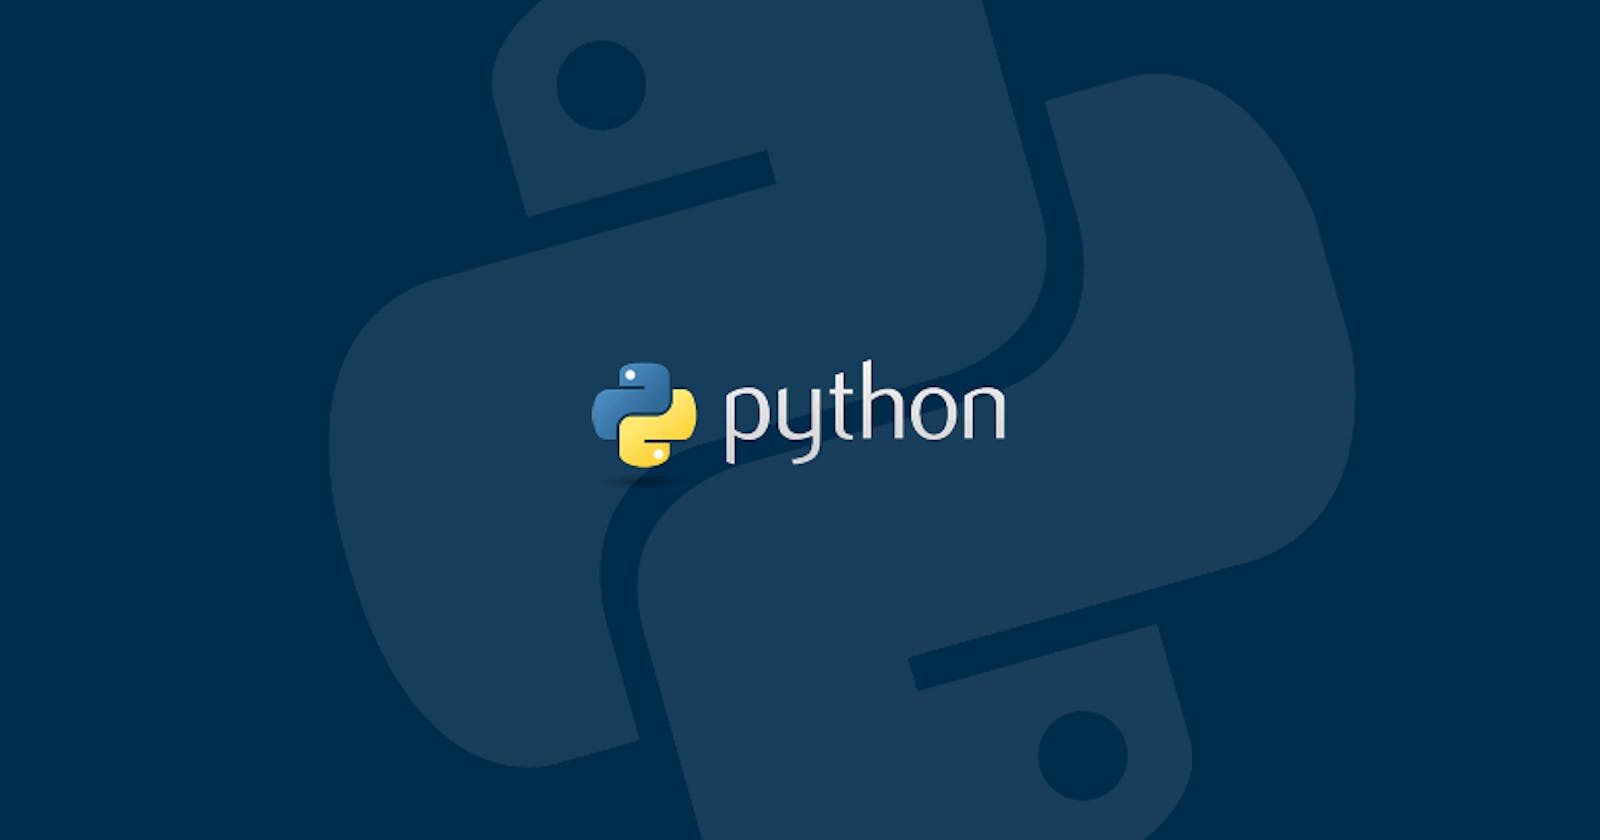 Python lists